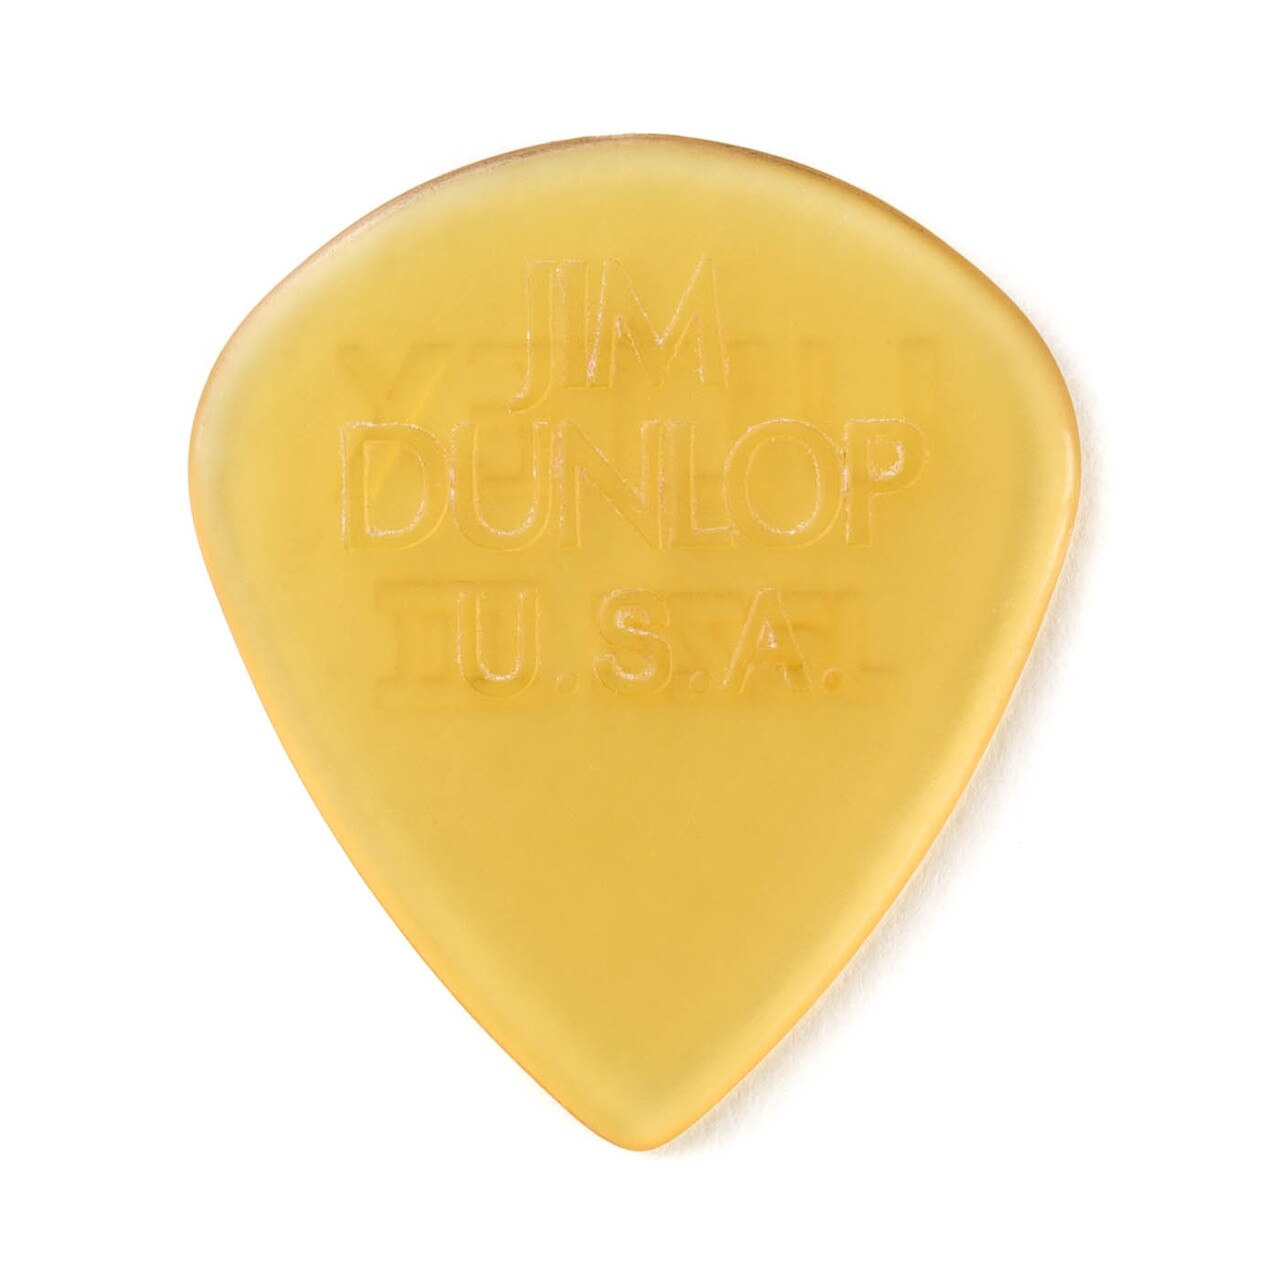 Jim Dunlop Ultex Jazz Iii 427r 1.38mm - Guitar pick - Variation 1